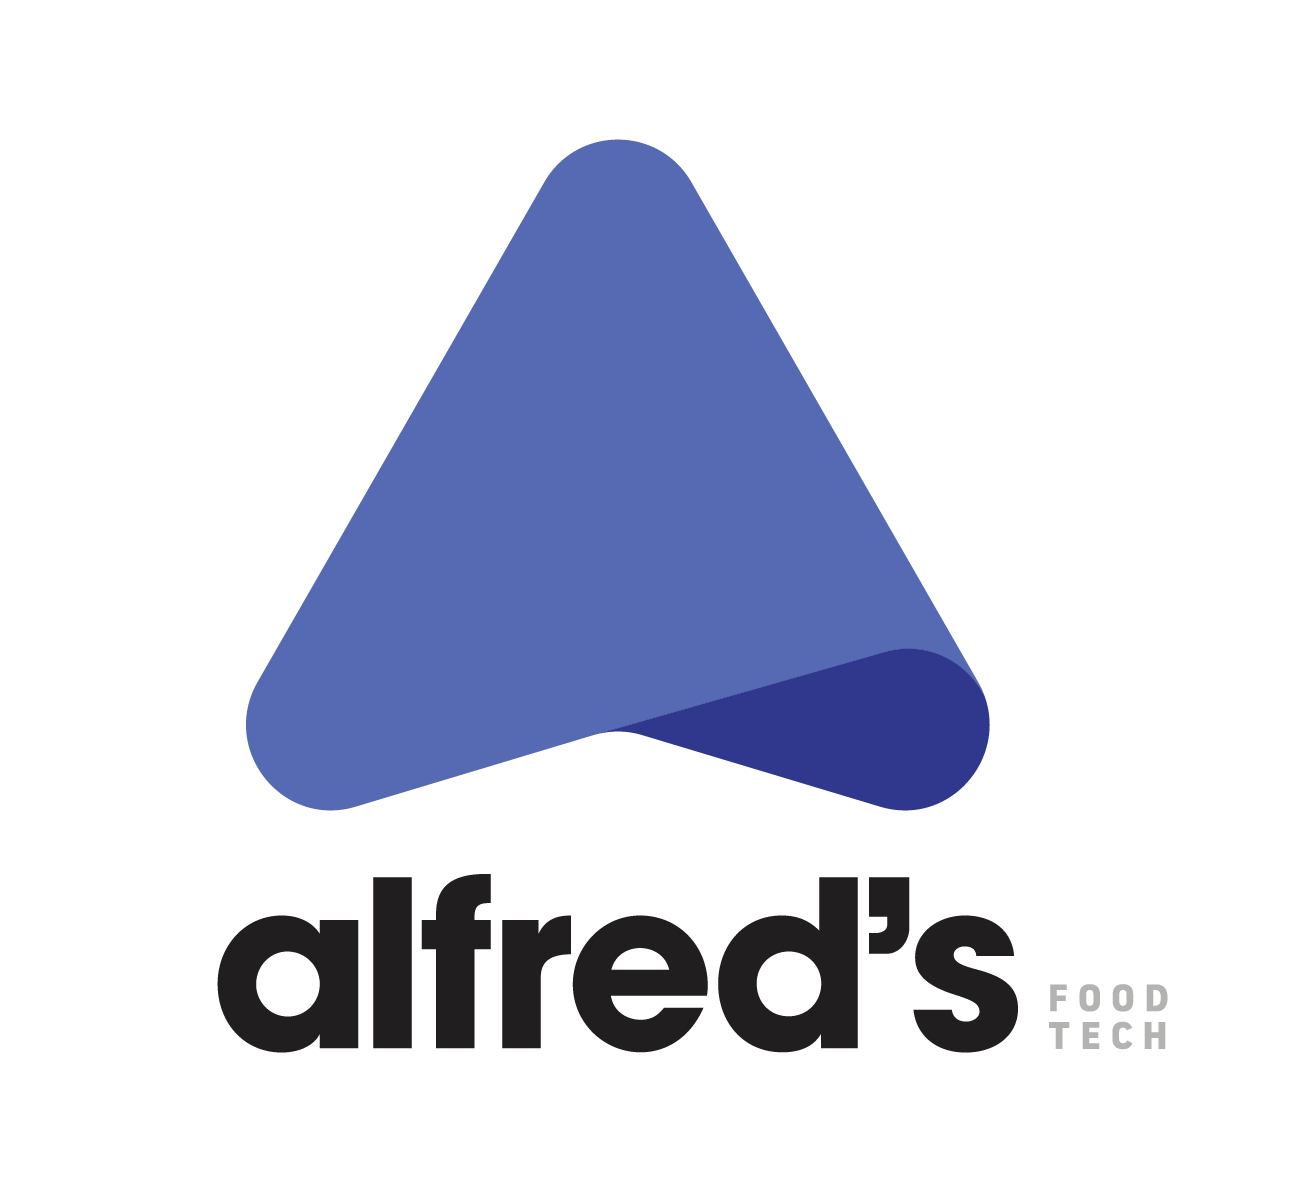 Alfred's Food-Tech logo